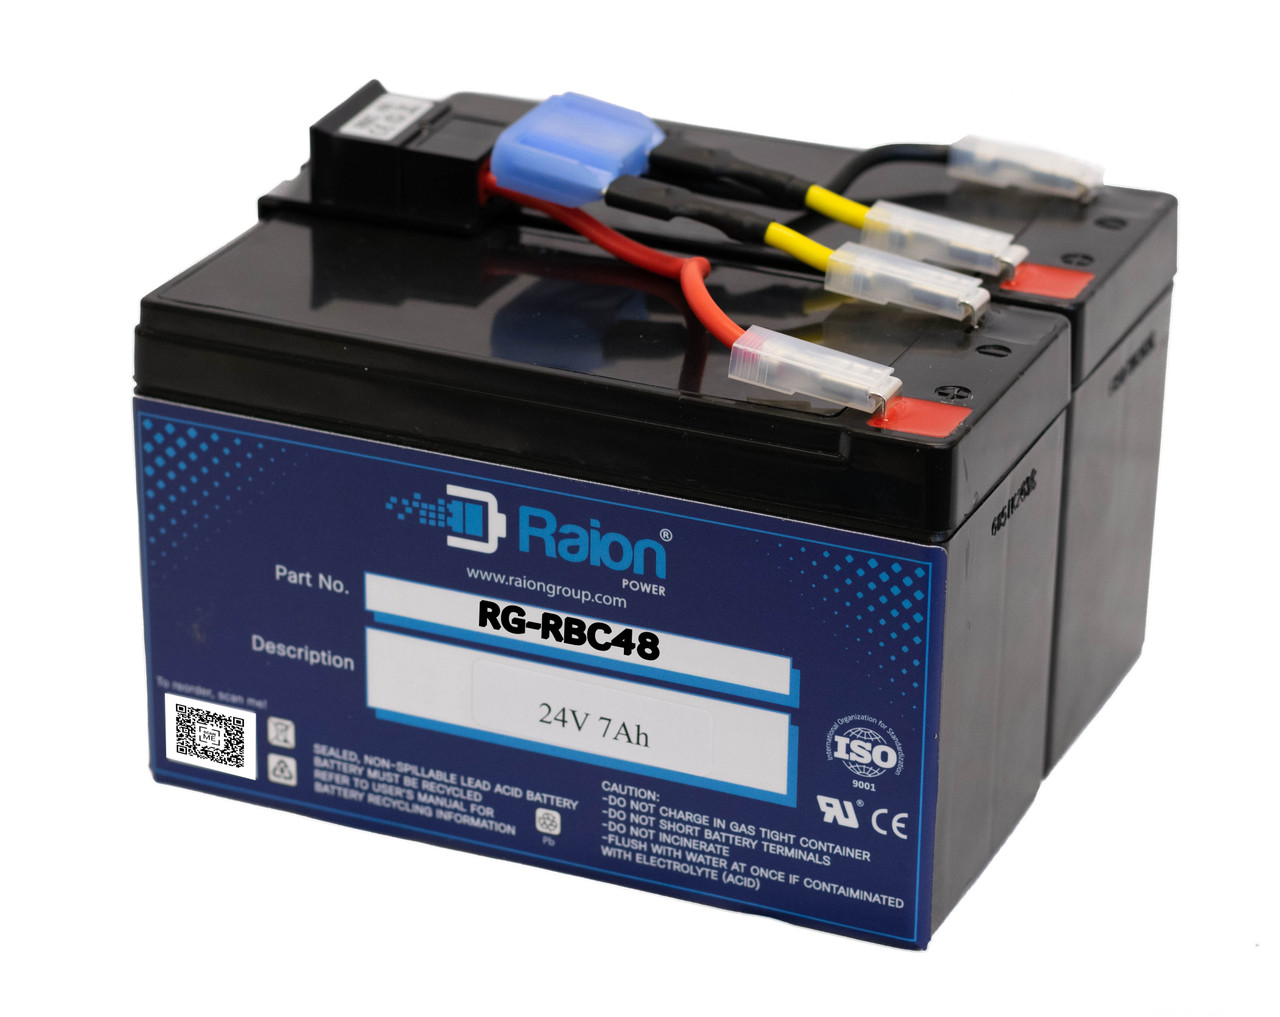 Raion Power RG-RBC48 replacement RBC48 battery cartridge for APC Smart-UPS 750VA SUA750VS